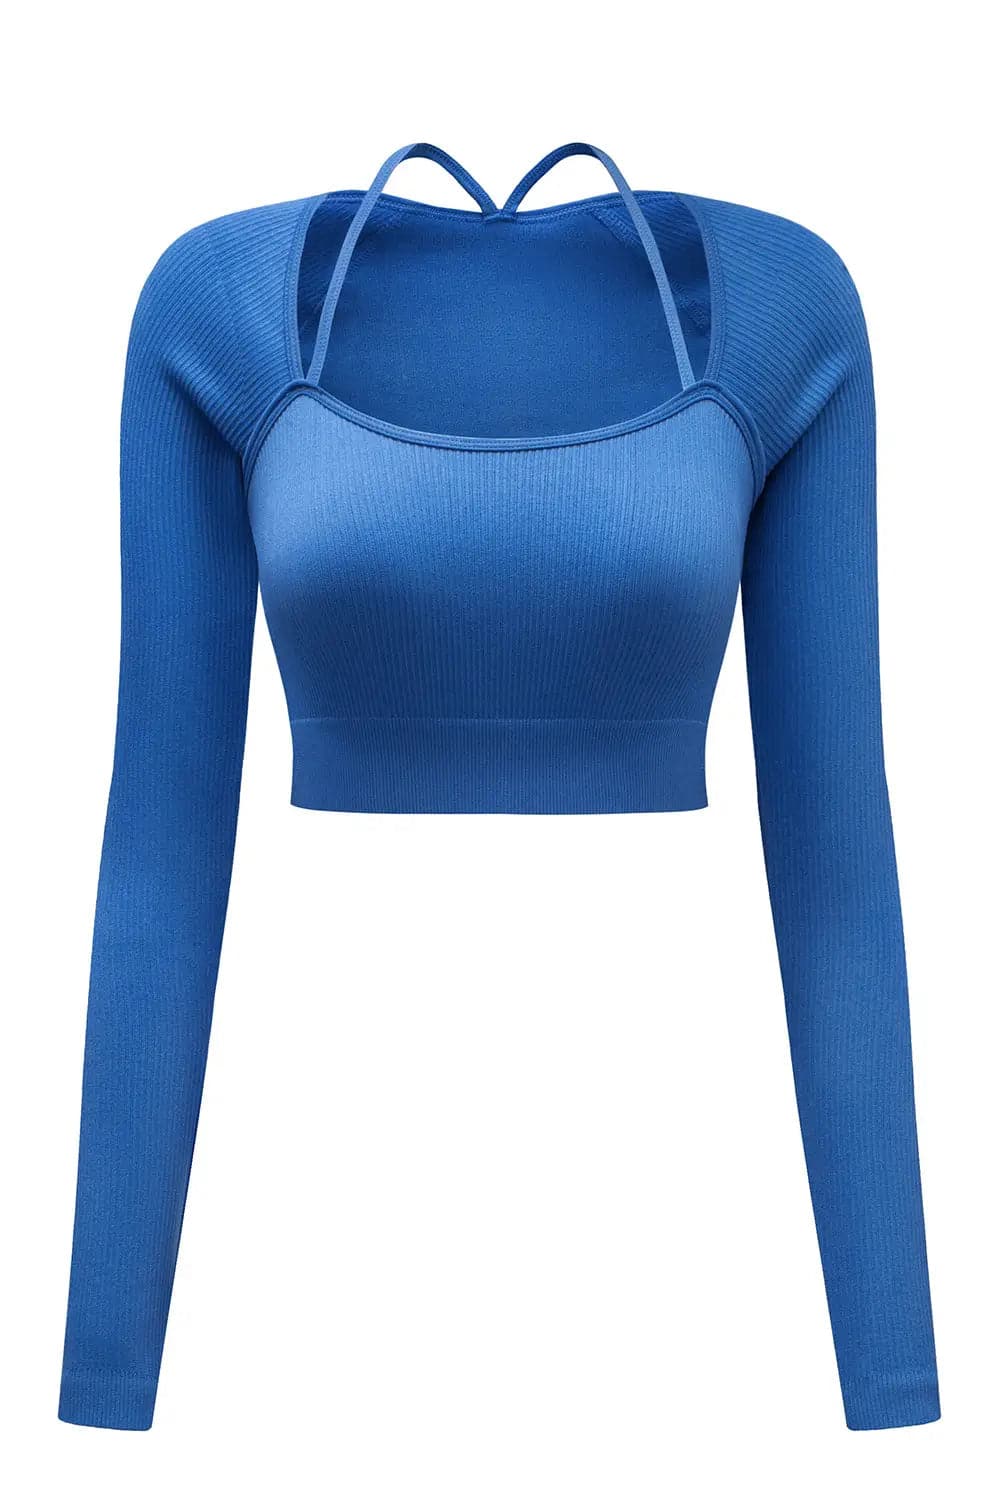 Women's Black Ribbed Crop Yoga Top | Long Sleeve Activewear - BioBodyBoost - Premium Sports Tops from BioBodyBoost - Just £18.96! Shop now at BioBodyBoost